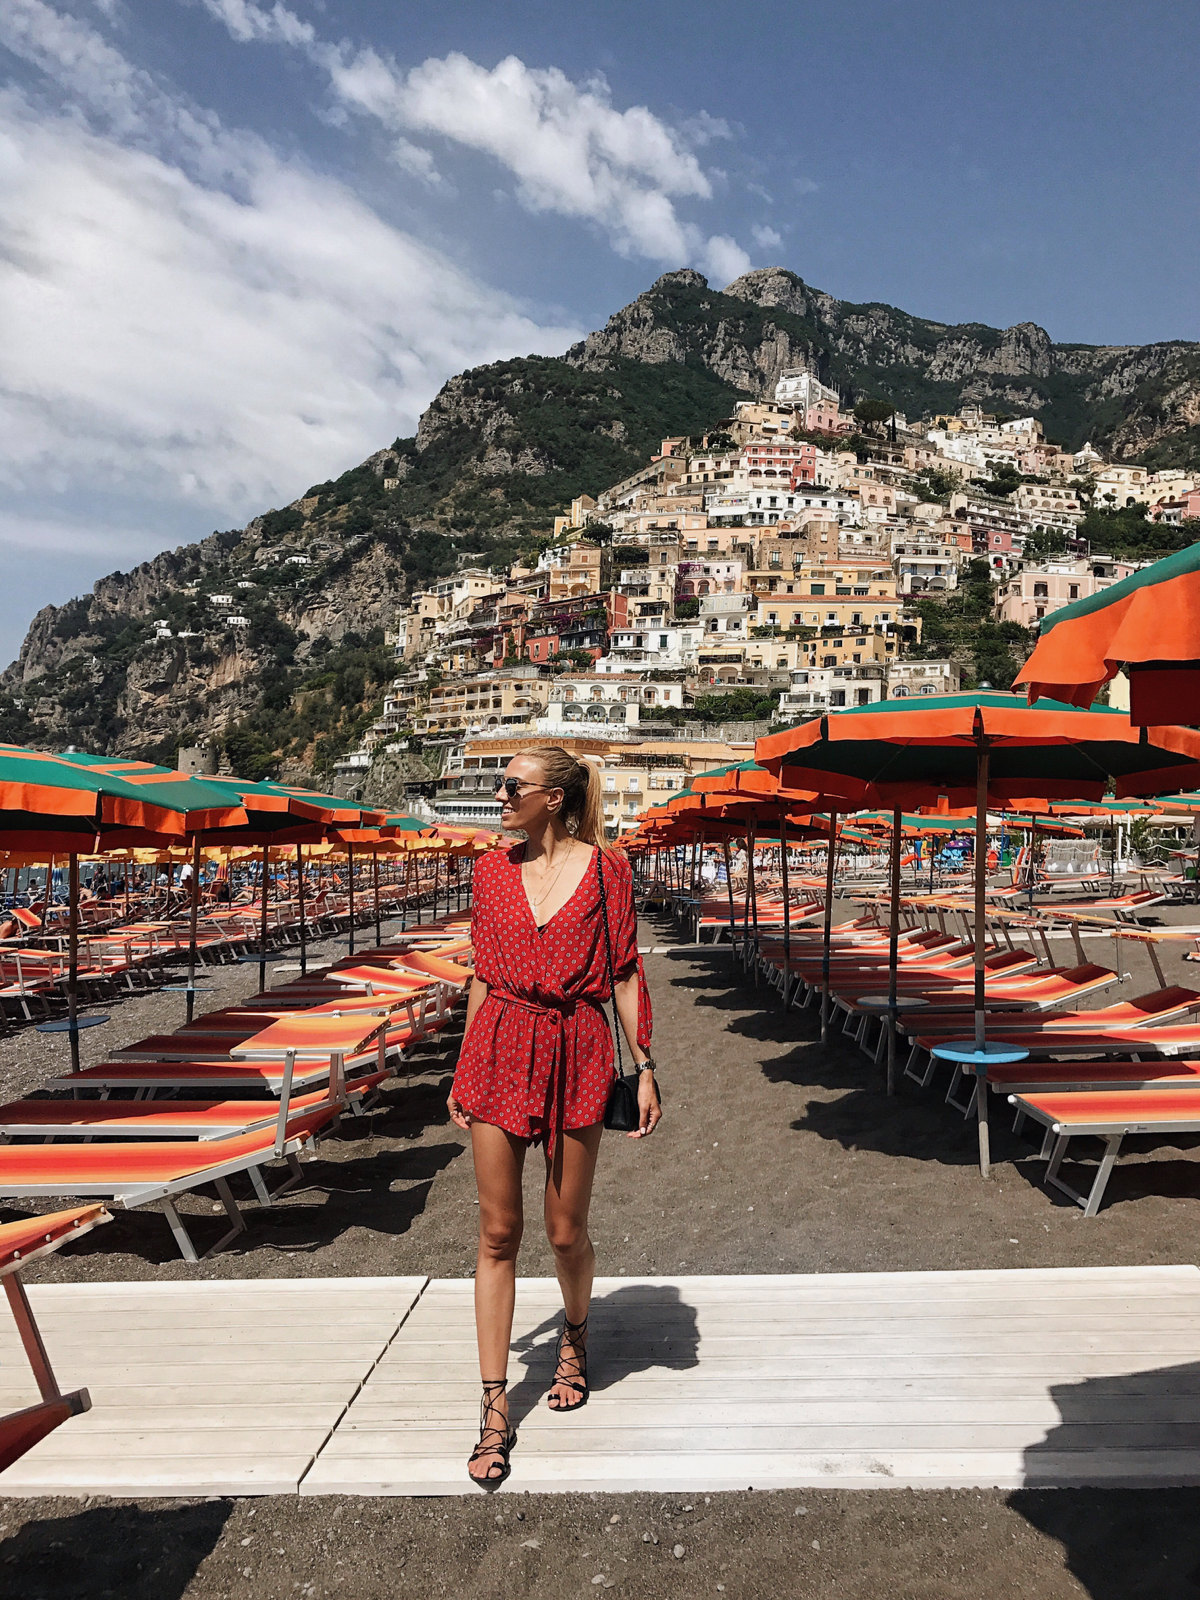 Italy Travel Guide: Positano + the Amalfi Coast